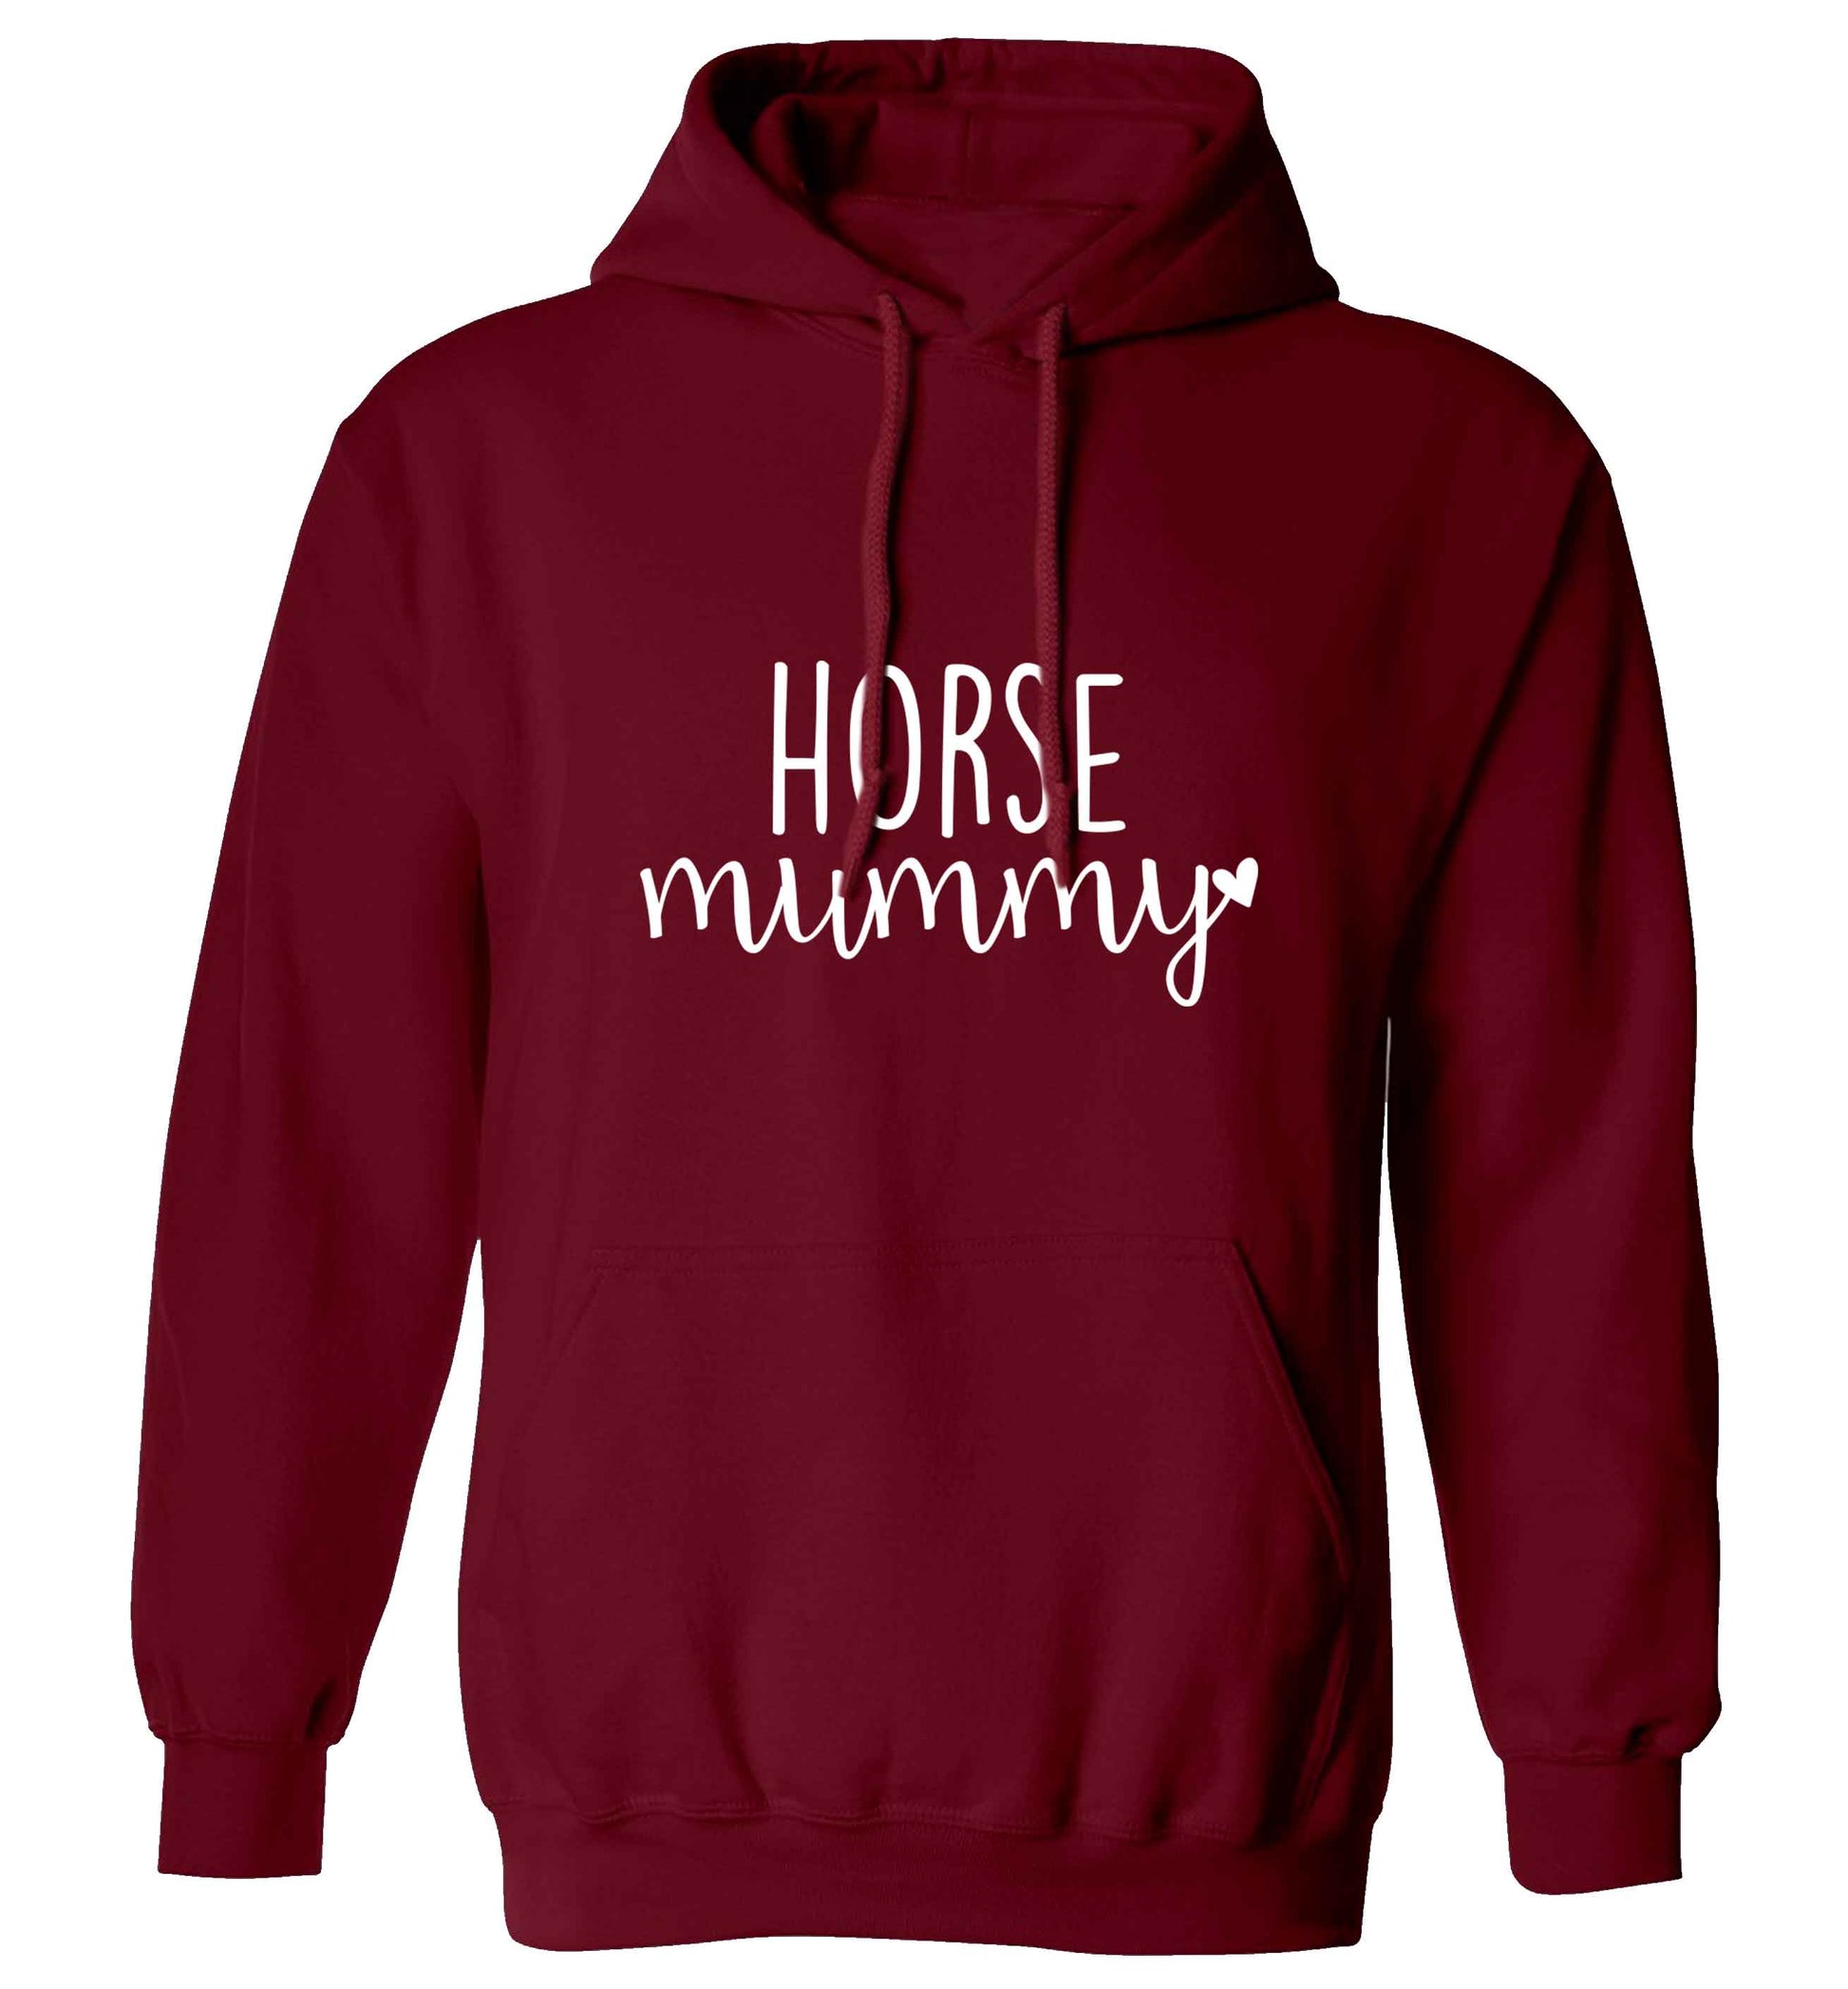 Horse mummy adults unisex maroon hoodie 2XL